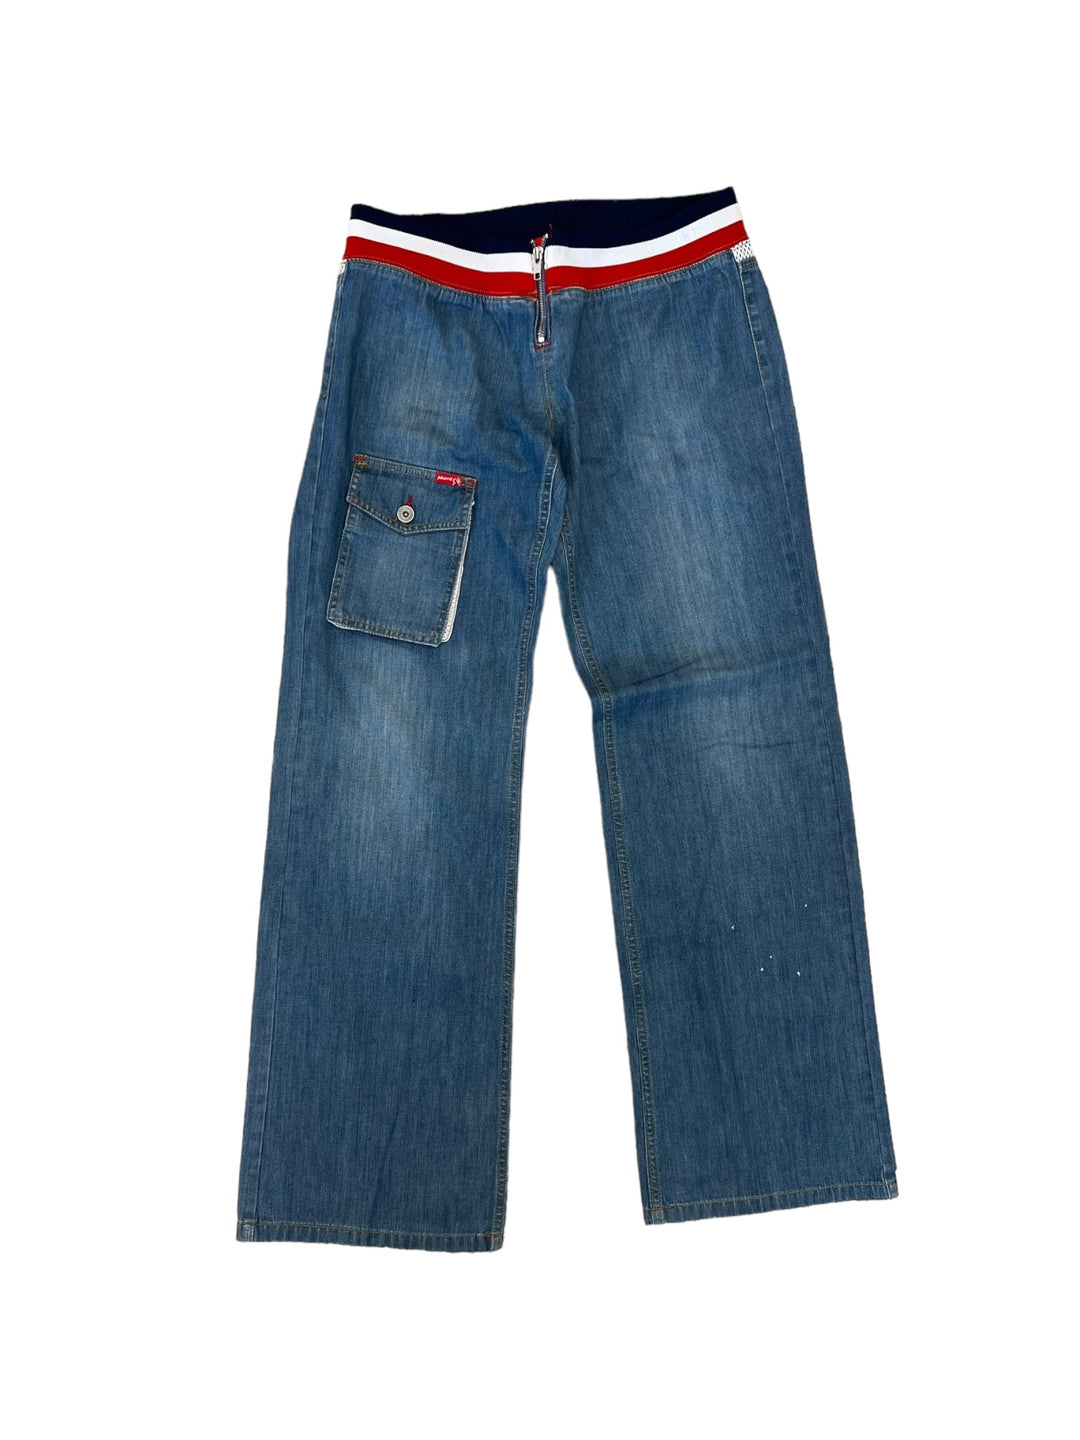 PHARD y2k extra low waist jeans women’s medium(38)